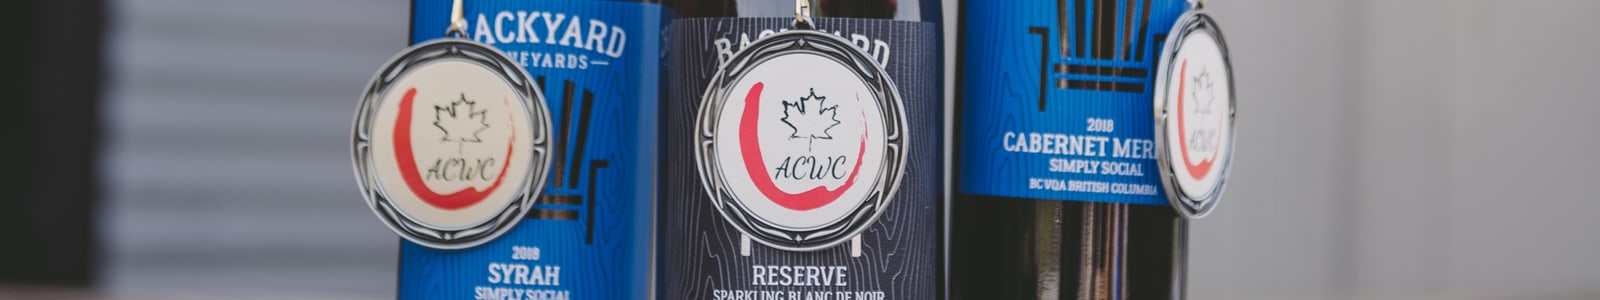 Award Winning BC Wines from Backyard Vineyards